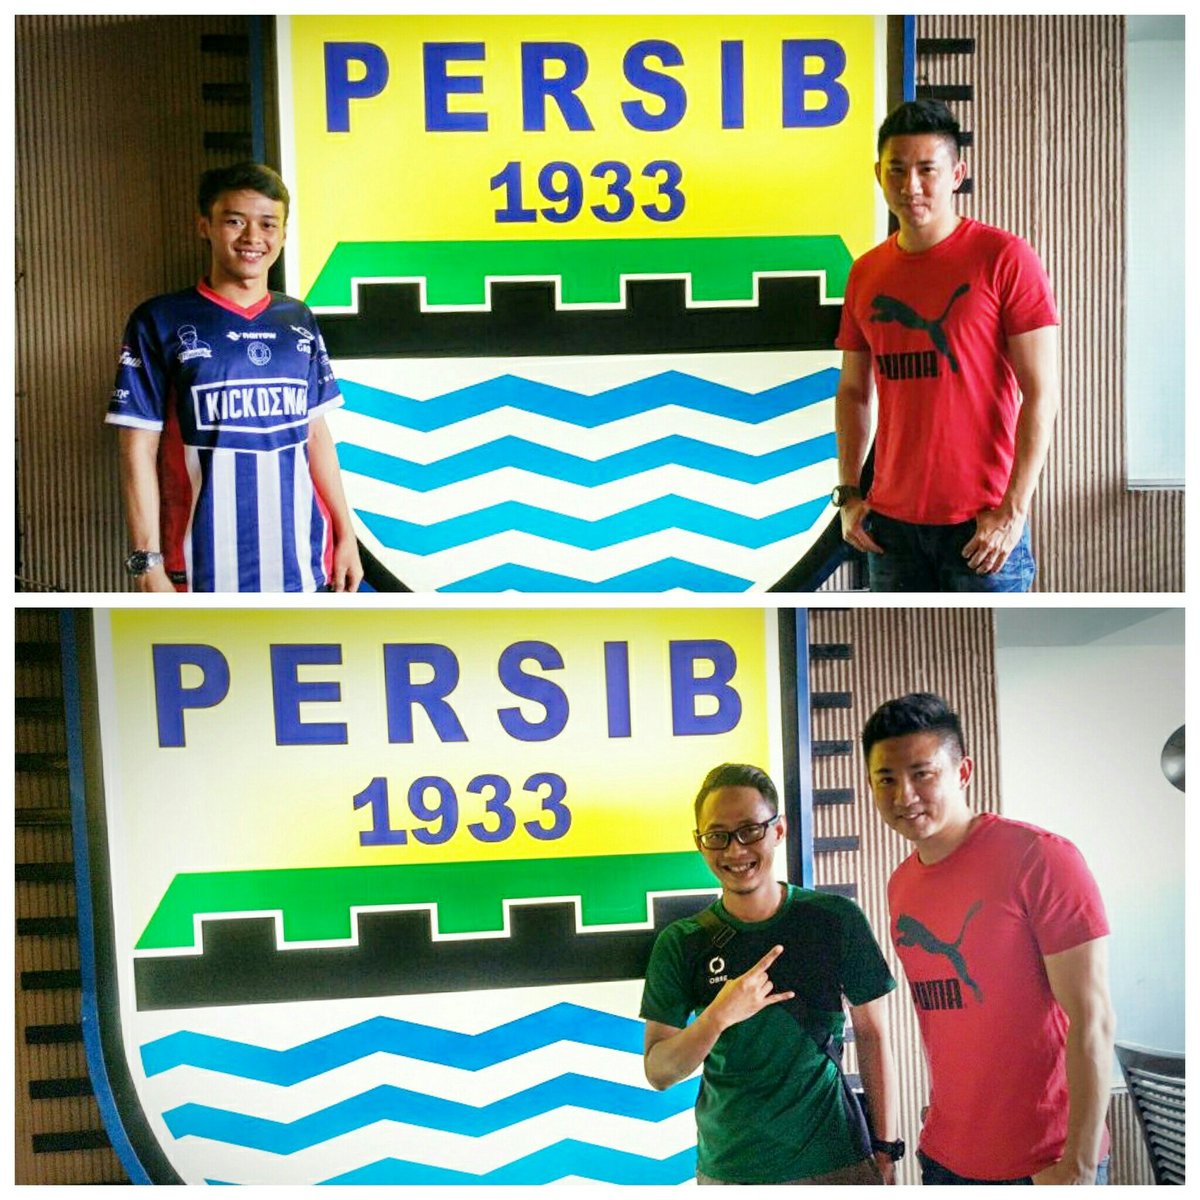 Football talk over a coffee with Explore Persib's Fahmi & @persib Merchandise Mgr, Achmad Gunawan. #PersibBandung